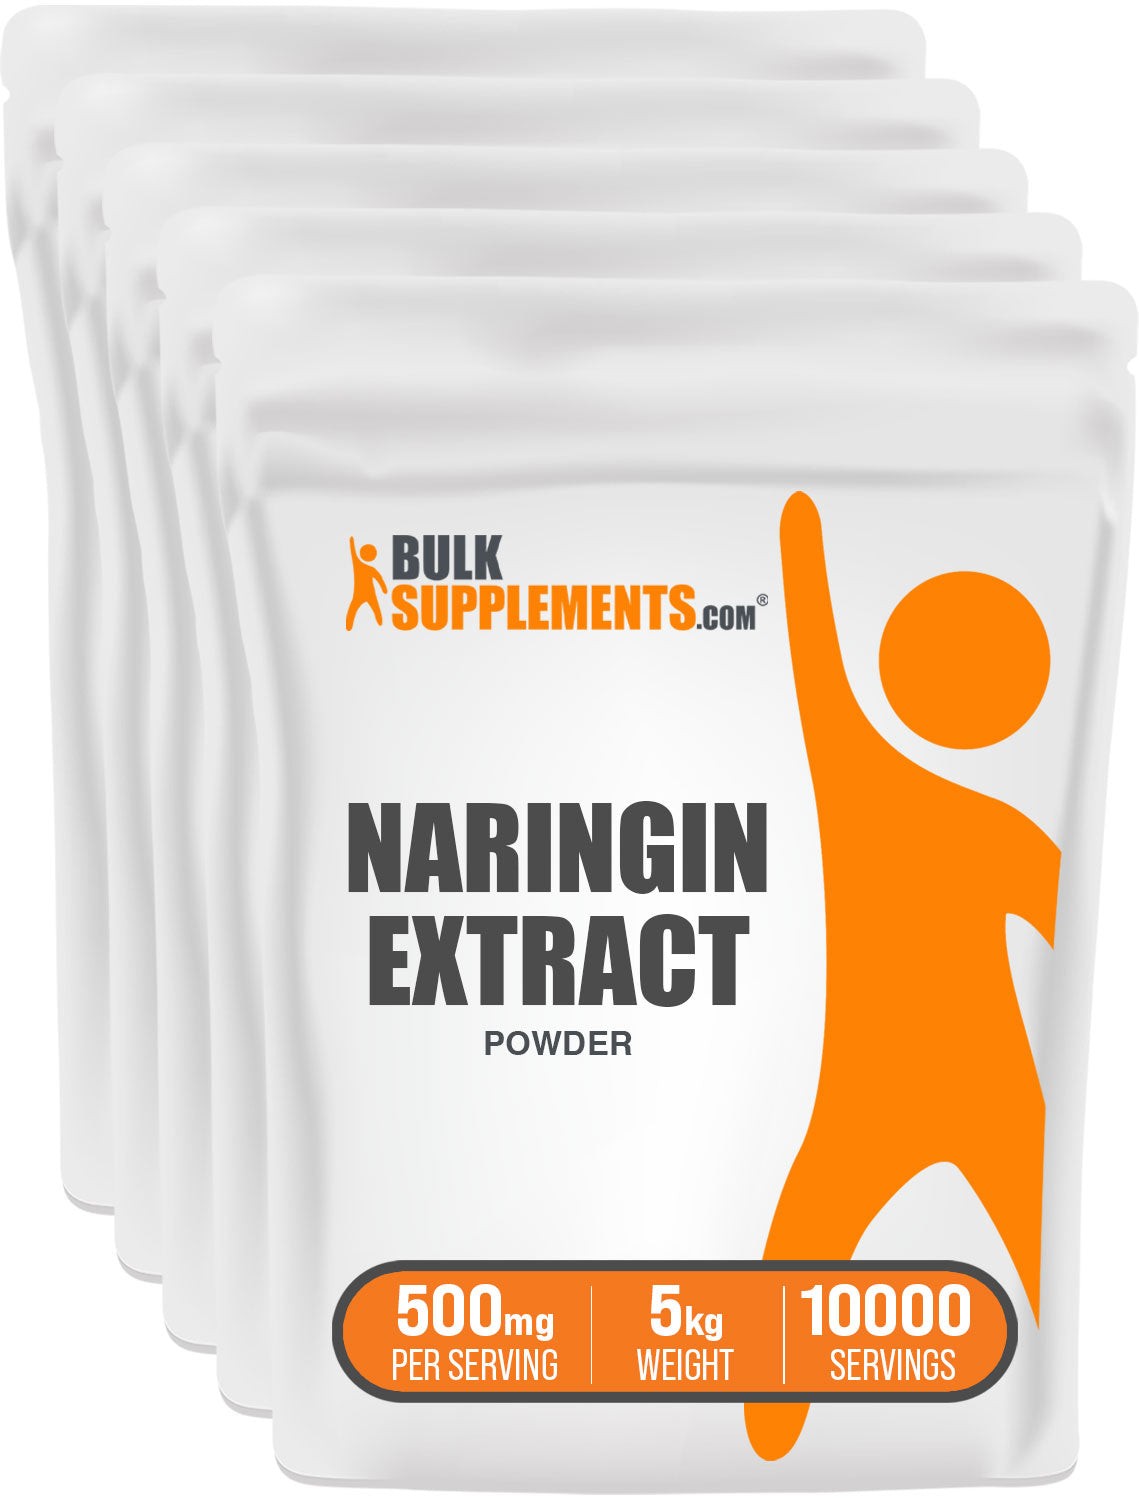 BulkSupplements Naringin Extract Powder 5kg bags